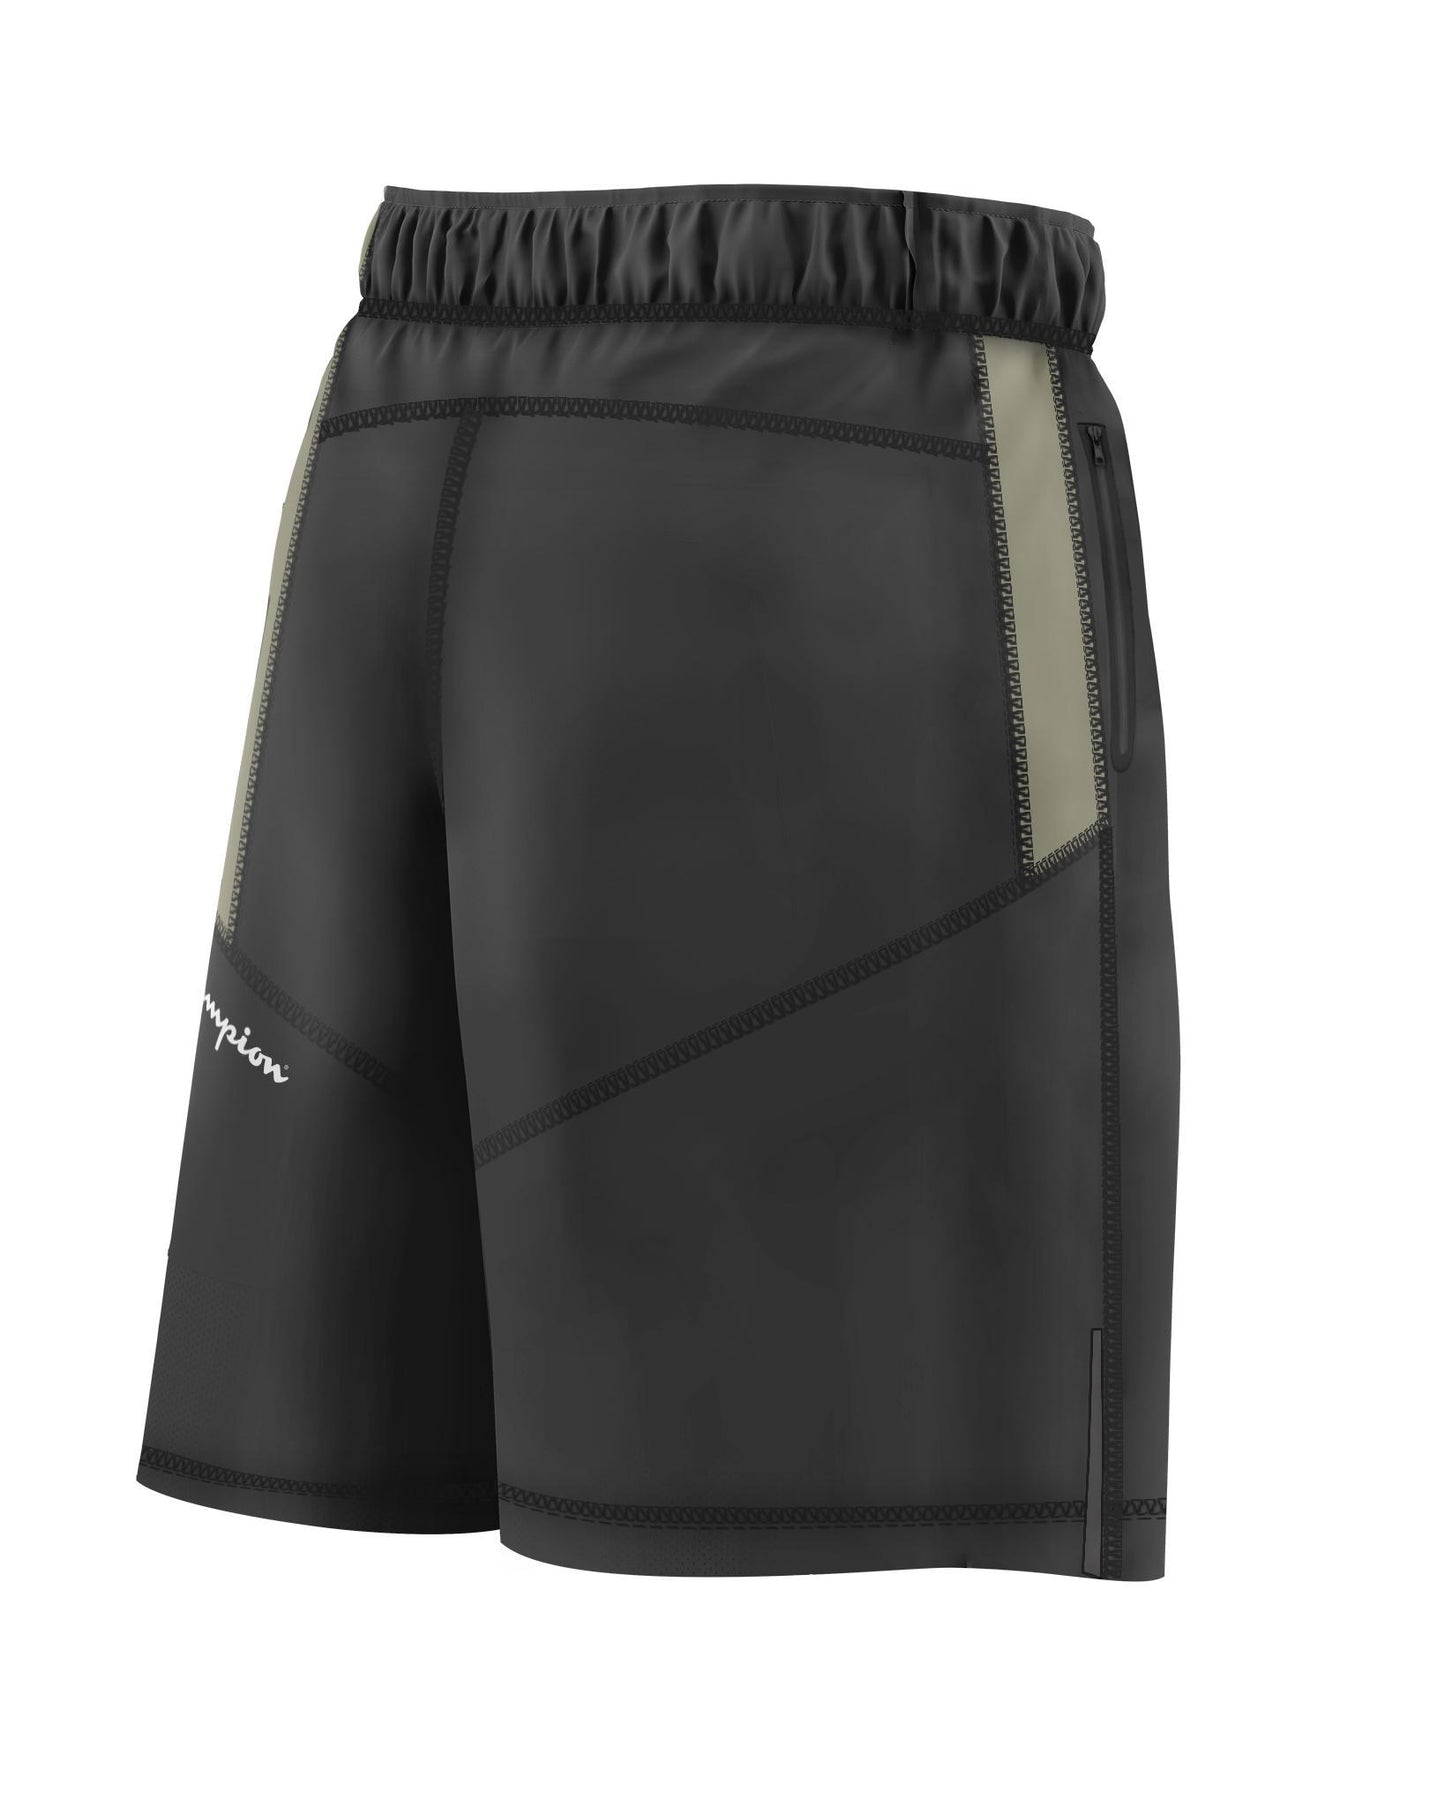 NBL24 Gym Shorts